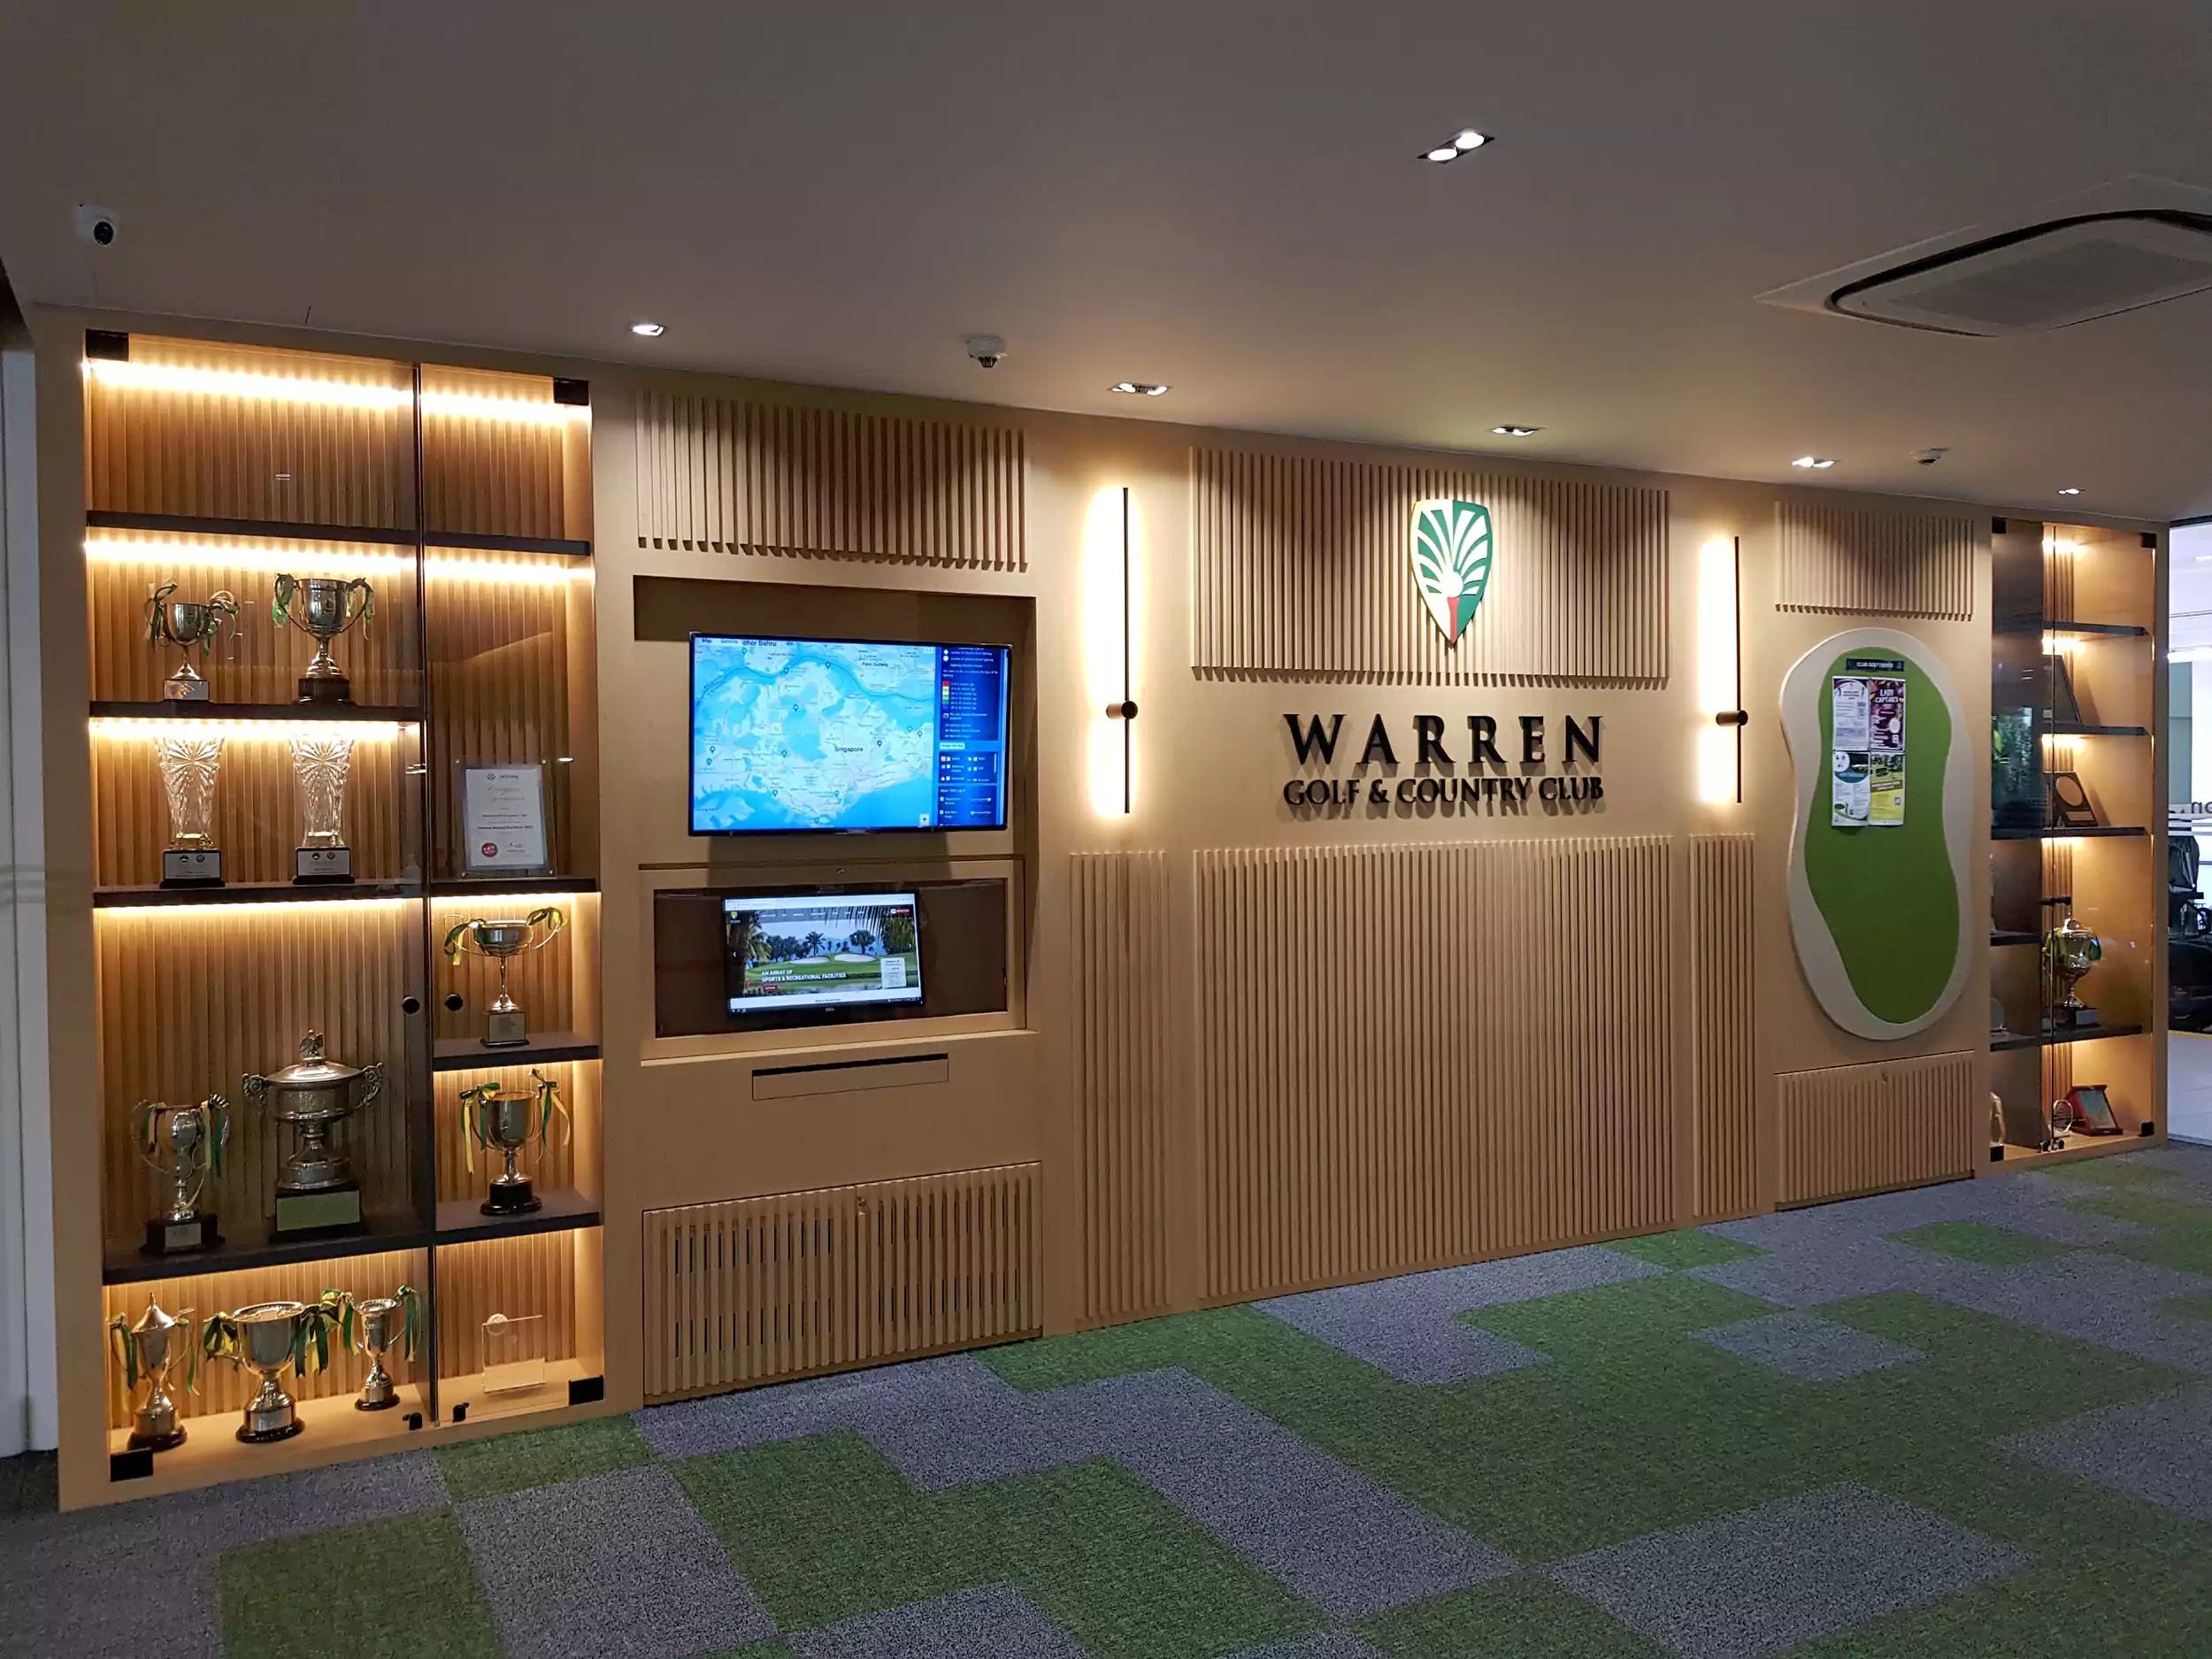 Warren Golf & Country Club_Image 03